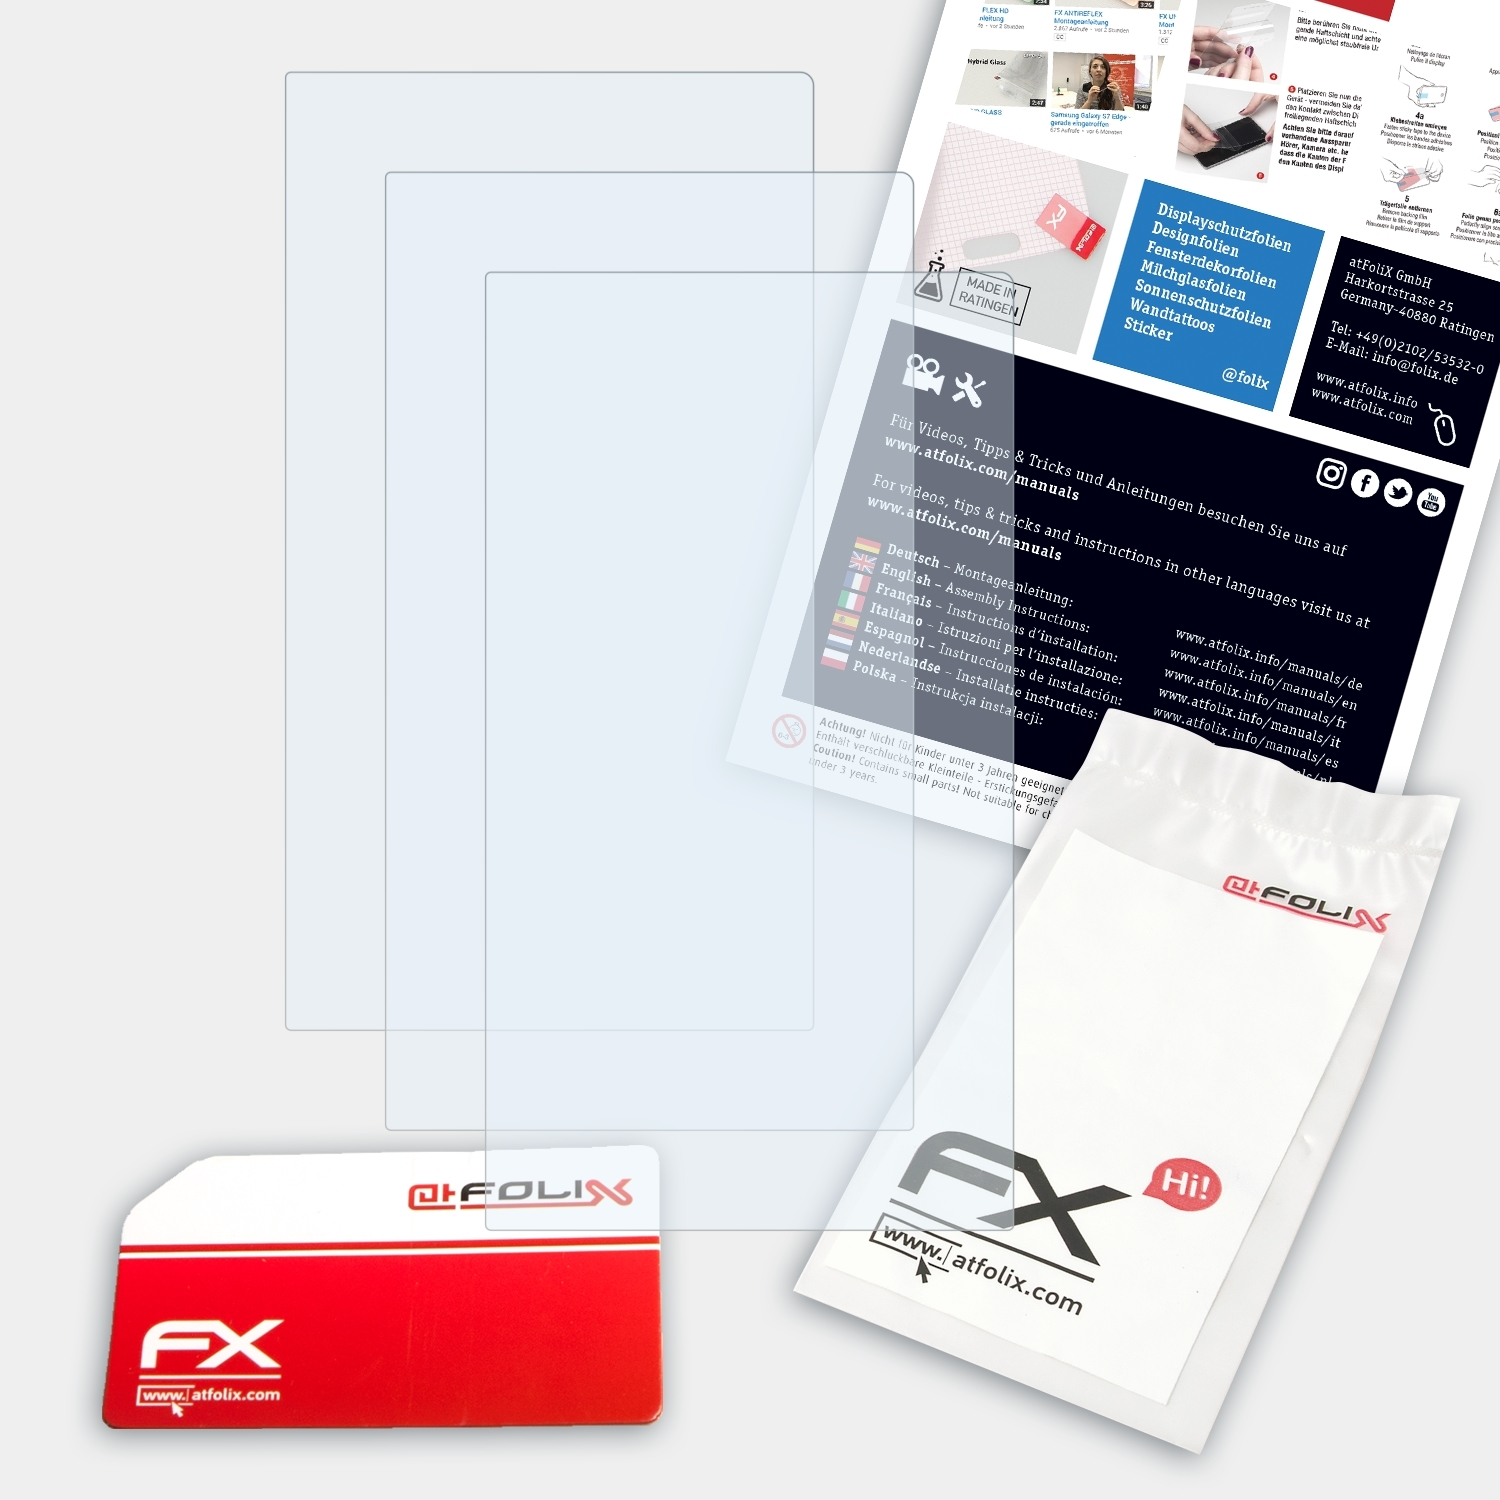 ATFOLIX 3x FX-Clear Shanling M6 Displayschutz(für Ultra)